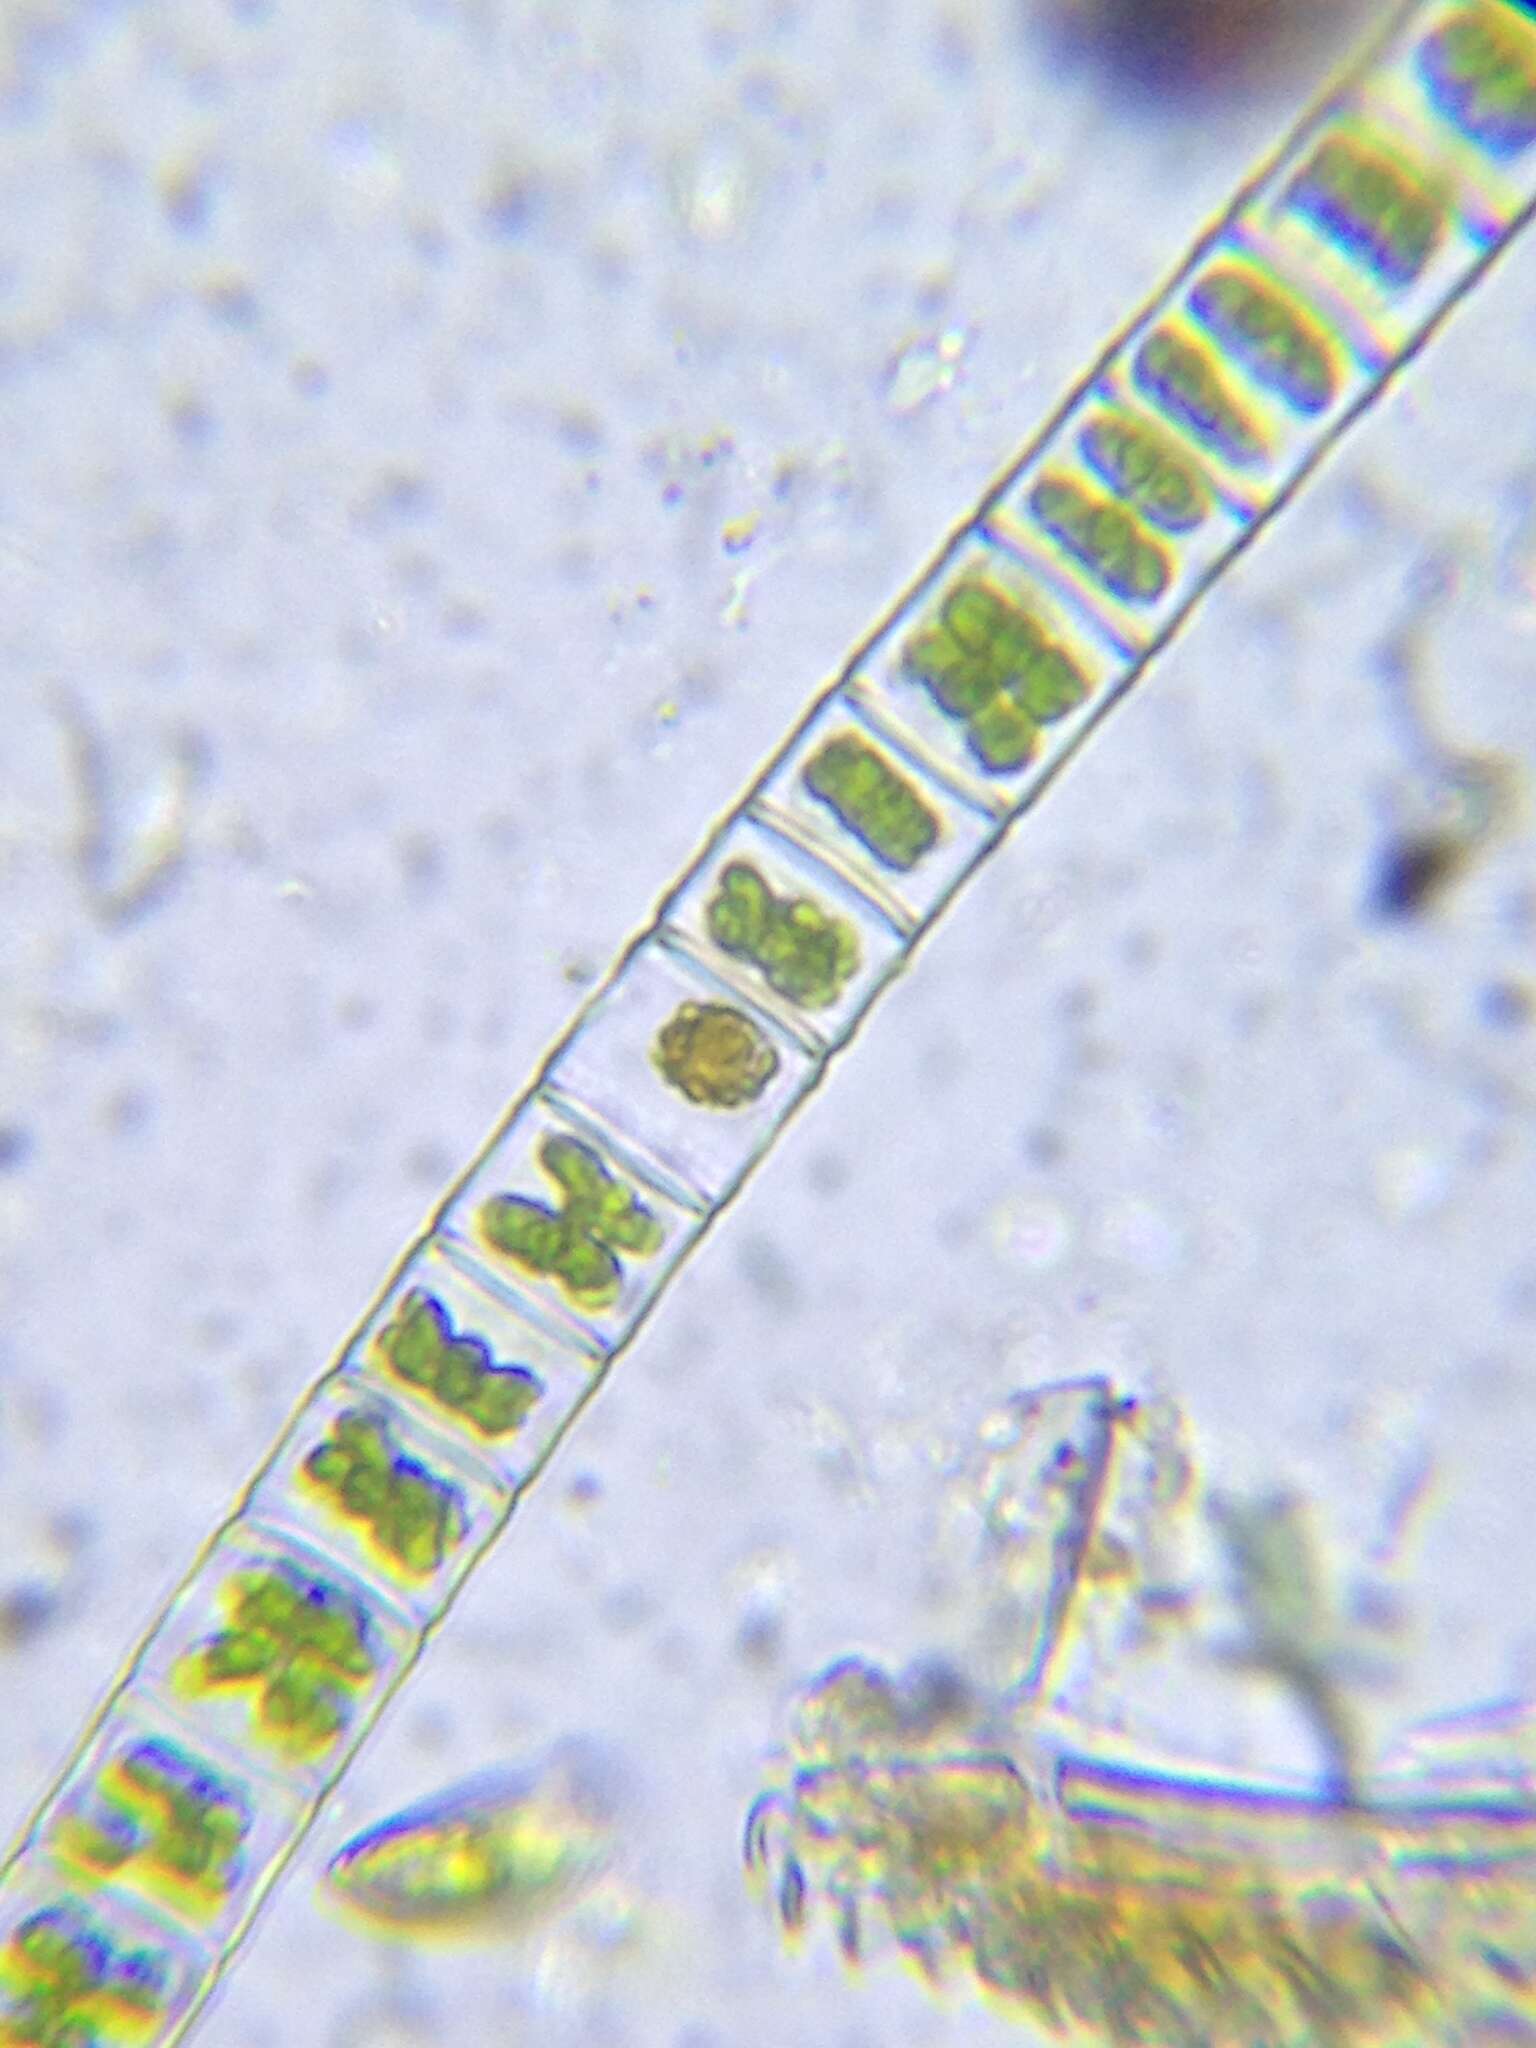 Image of Hyalotheca mucosa